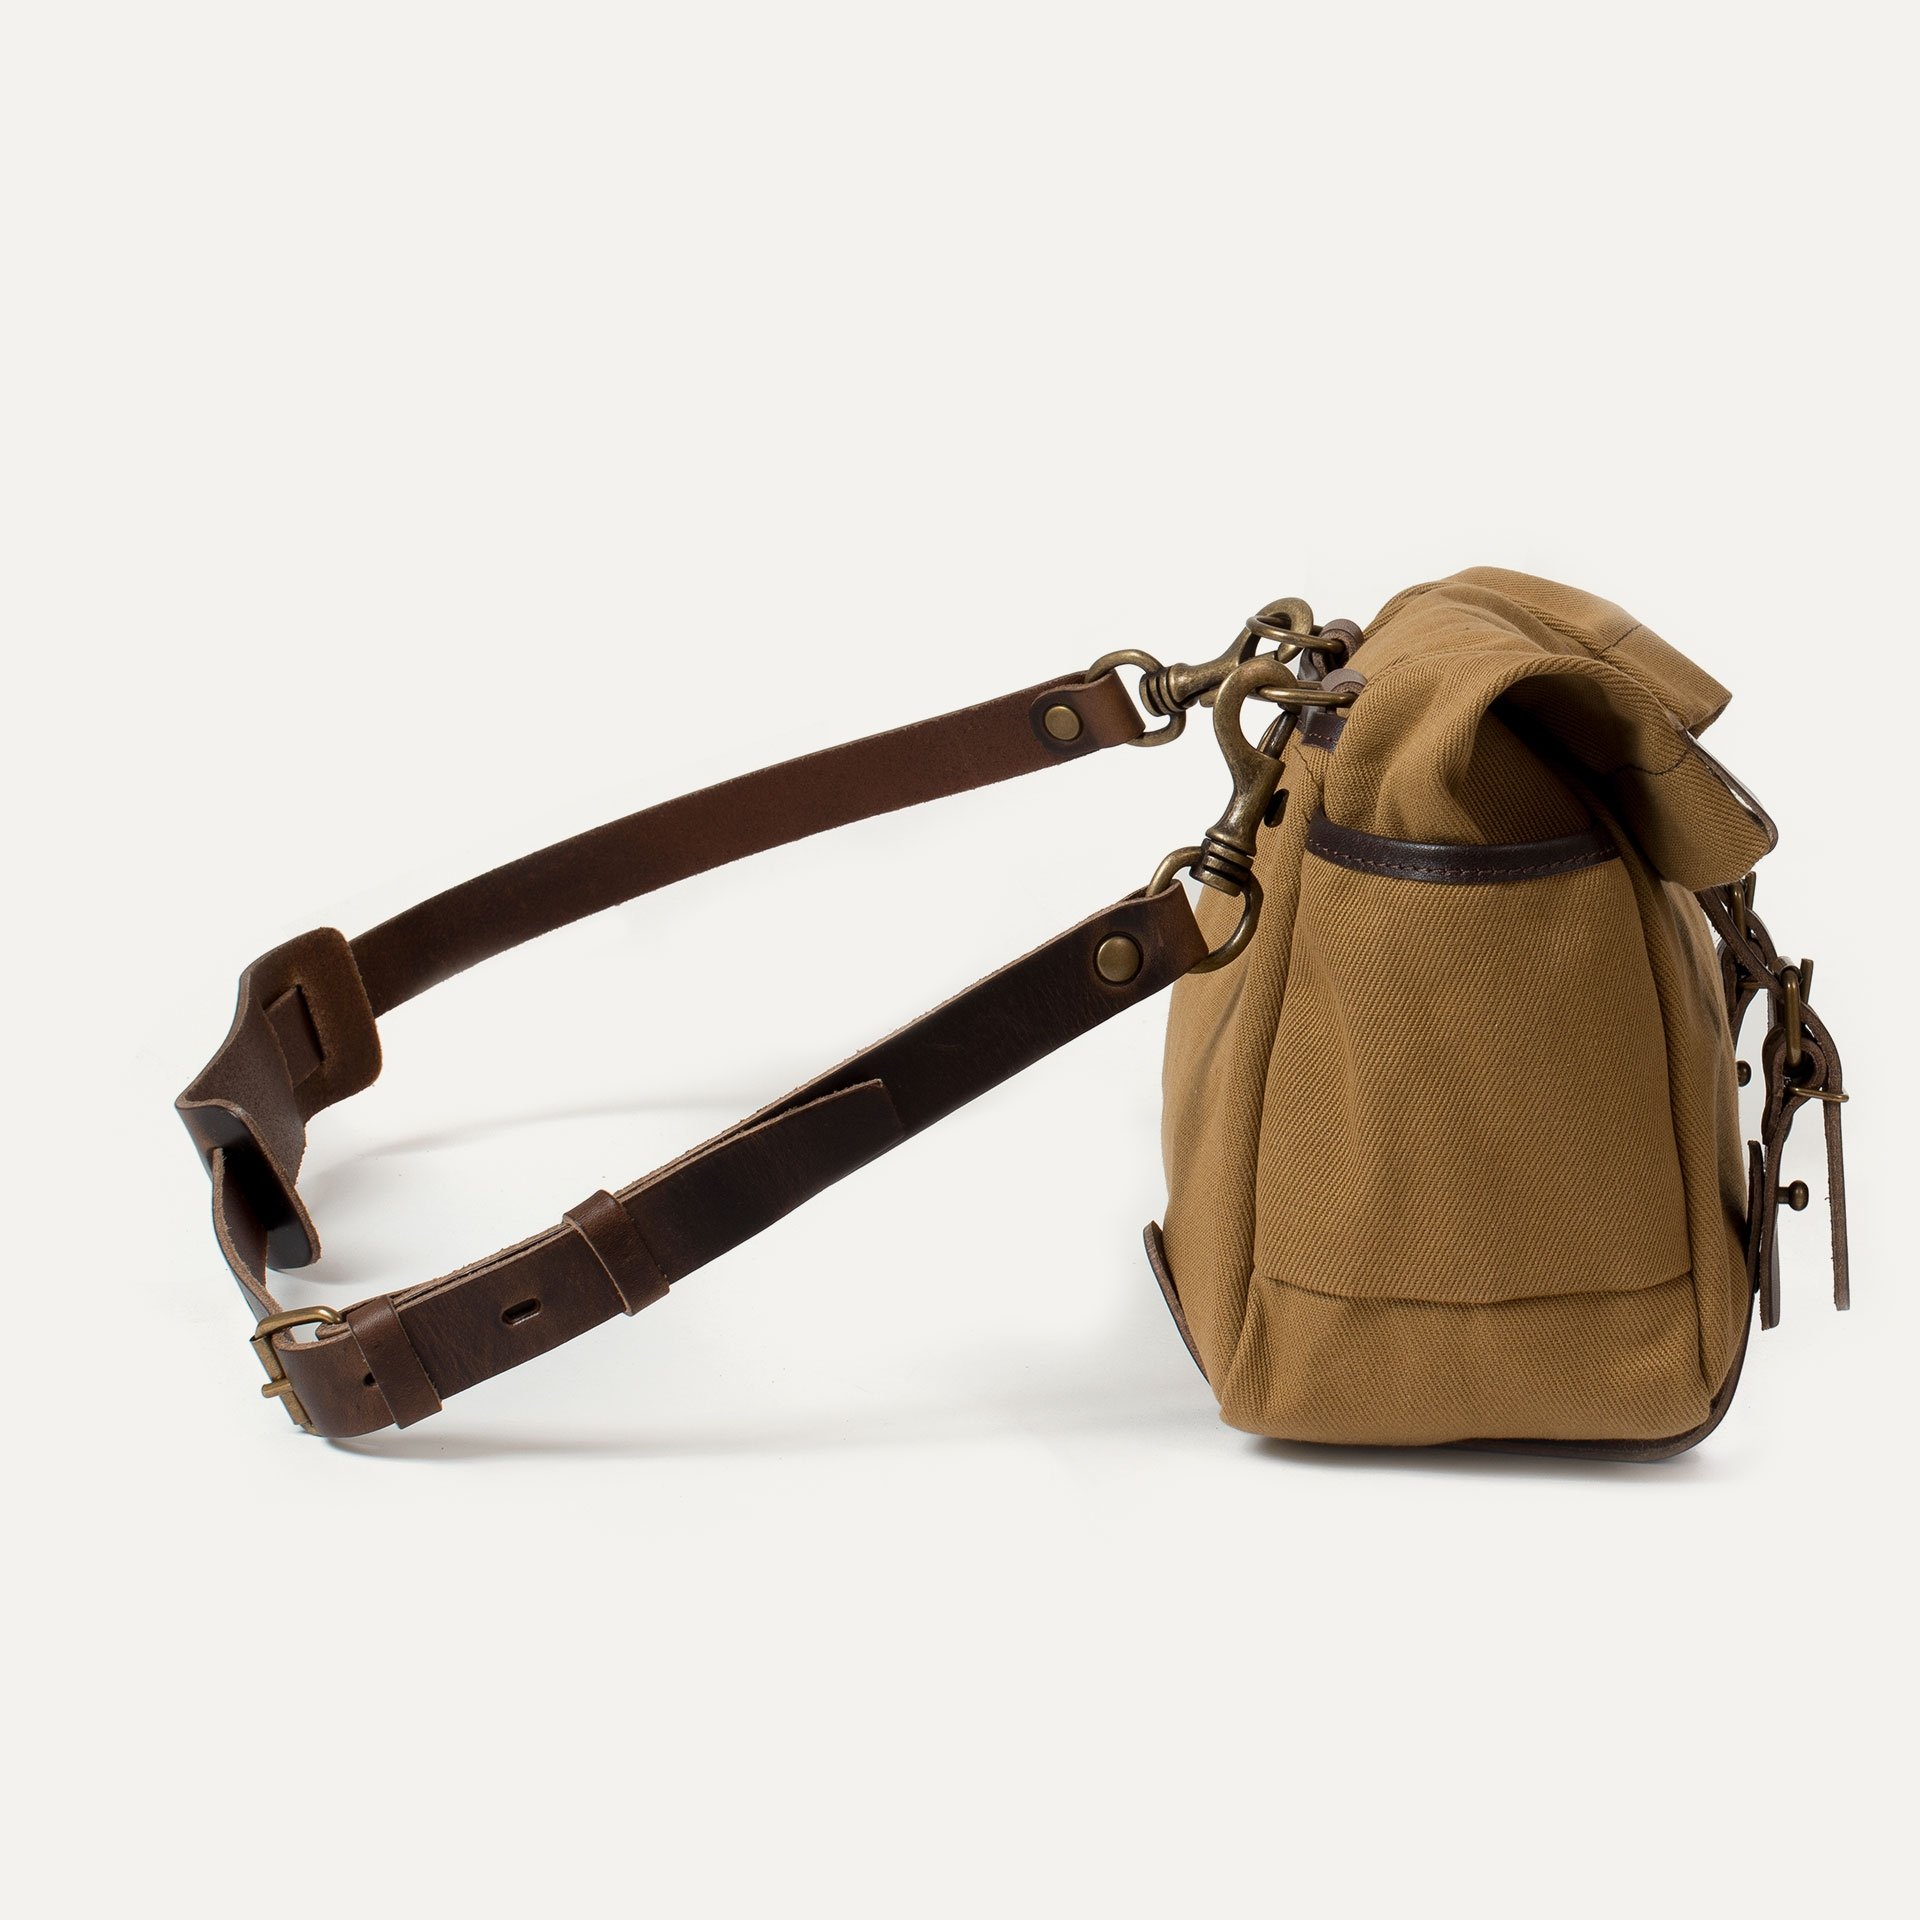 Gibus tool bag - Camel BM (image n°3)